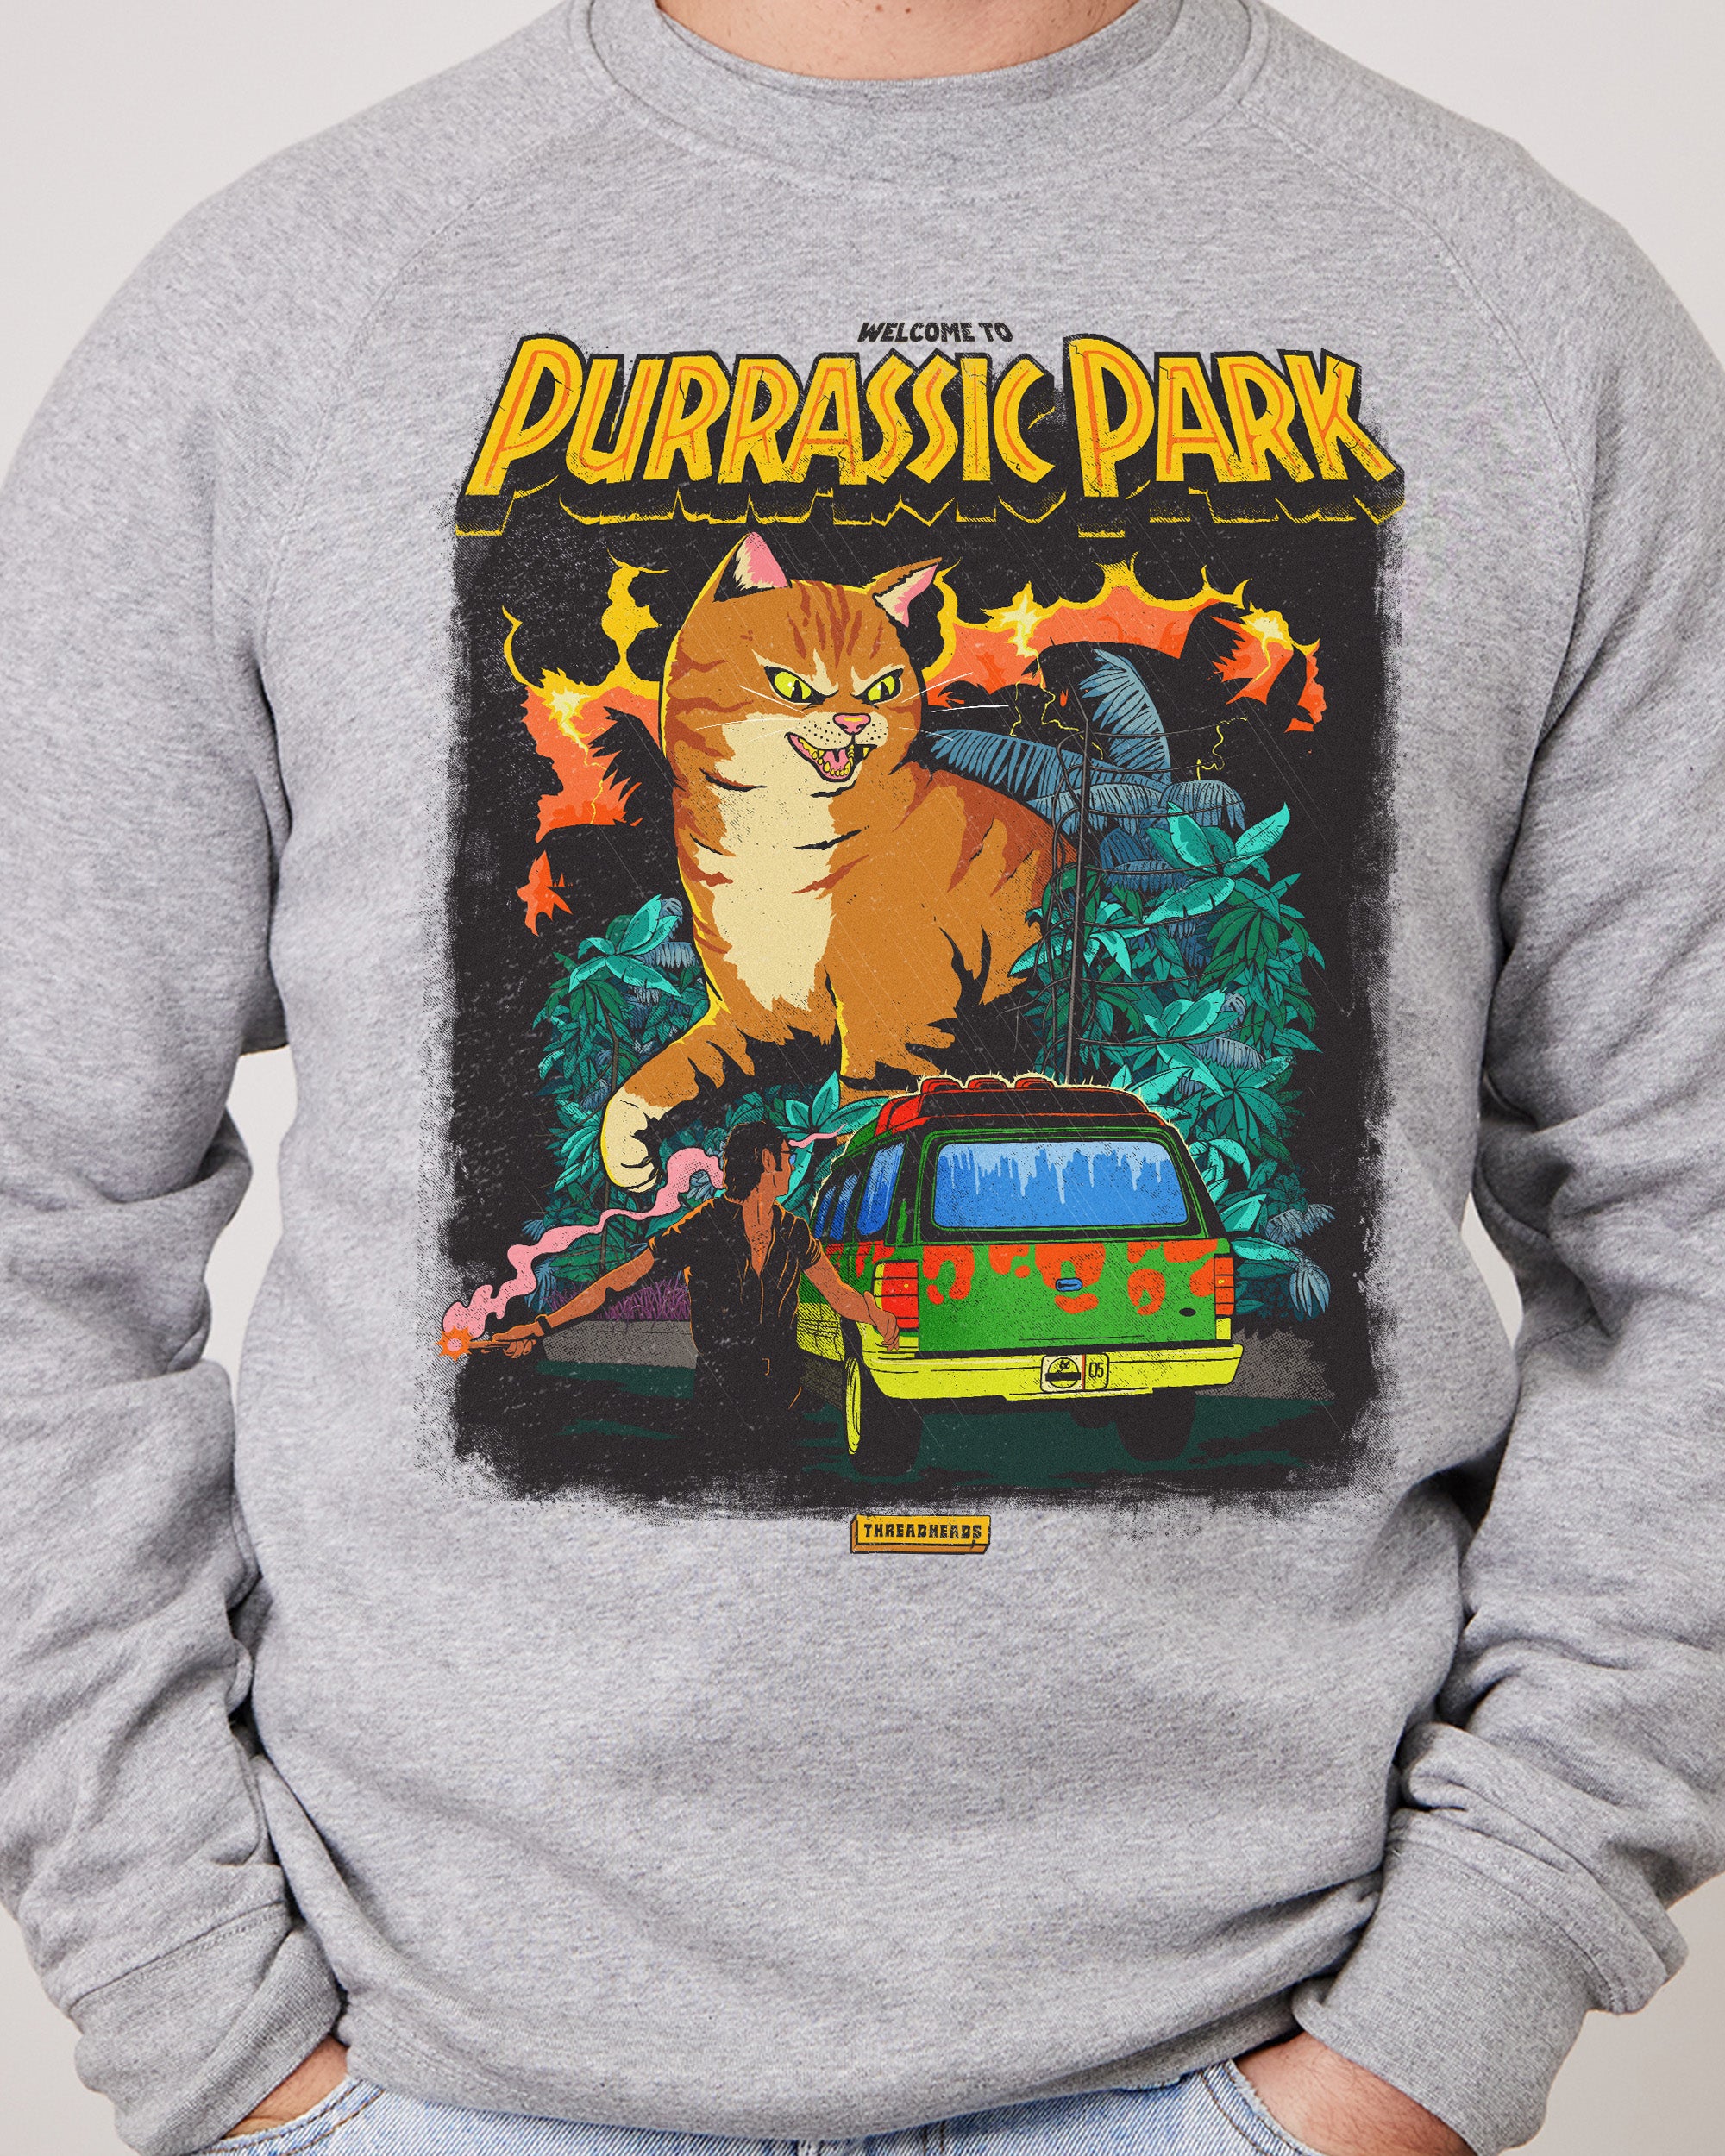 Purrassic Park Sweater Australia Online